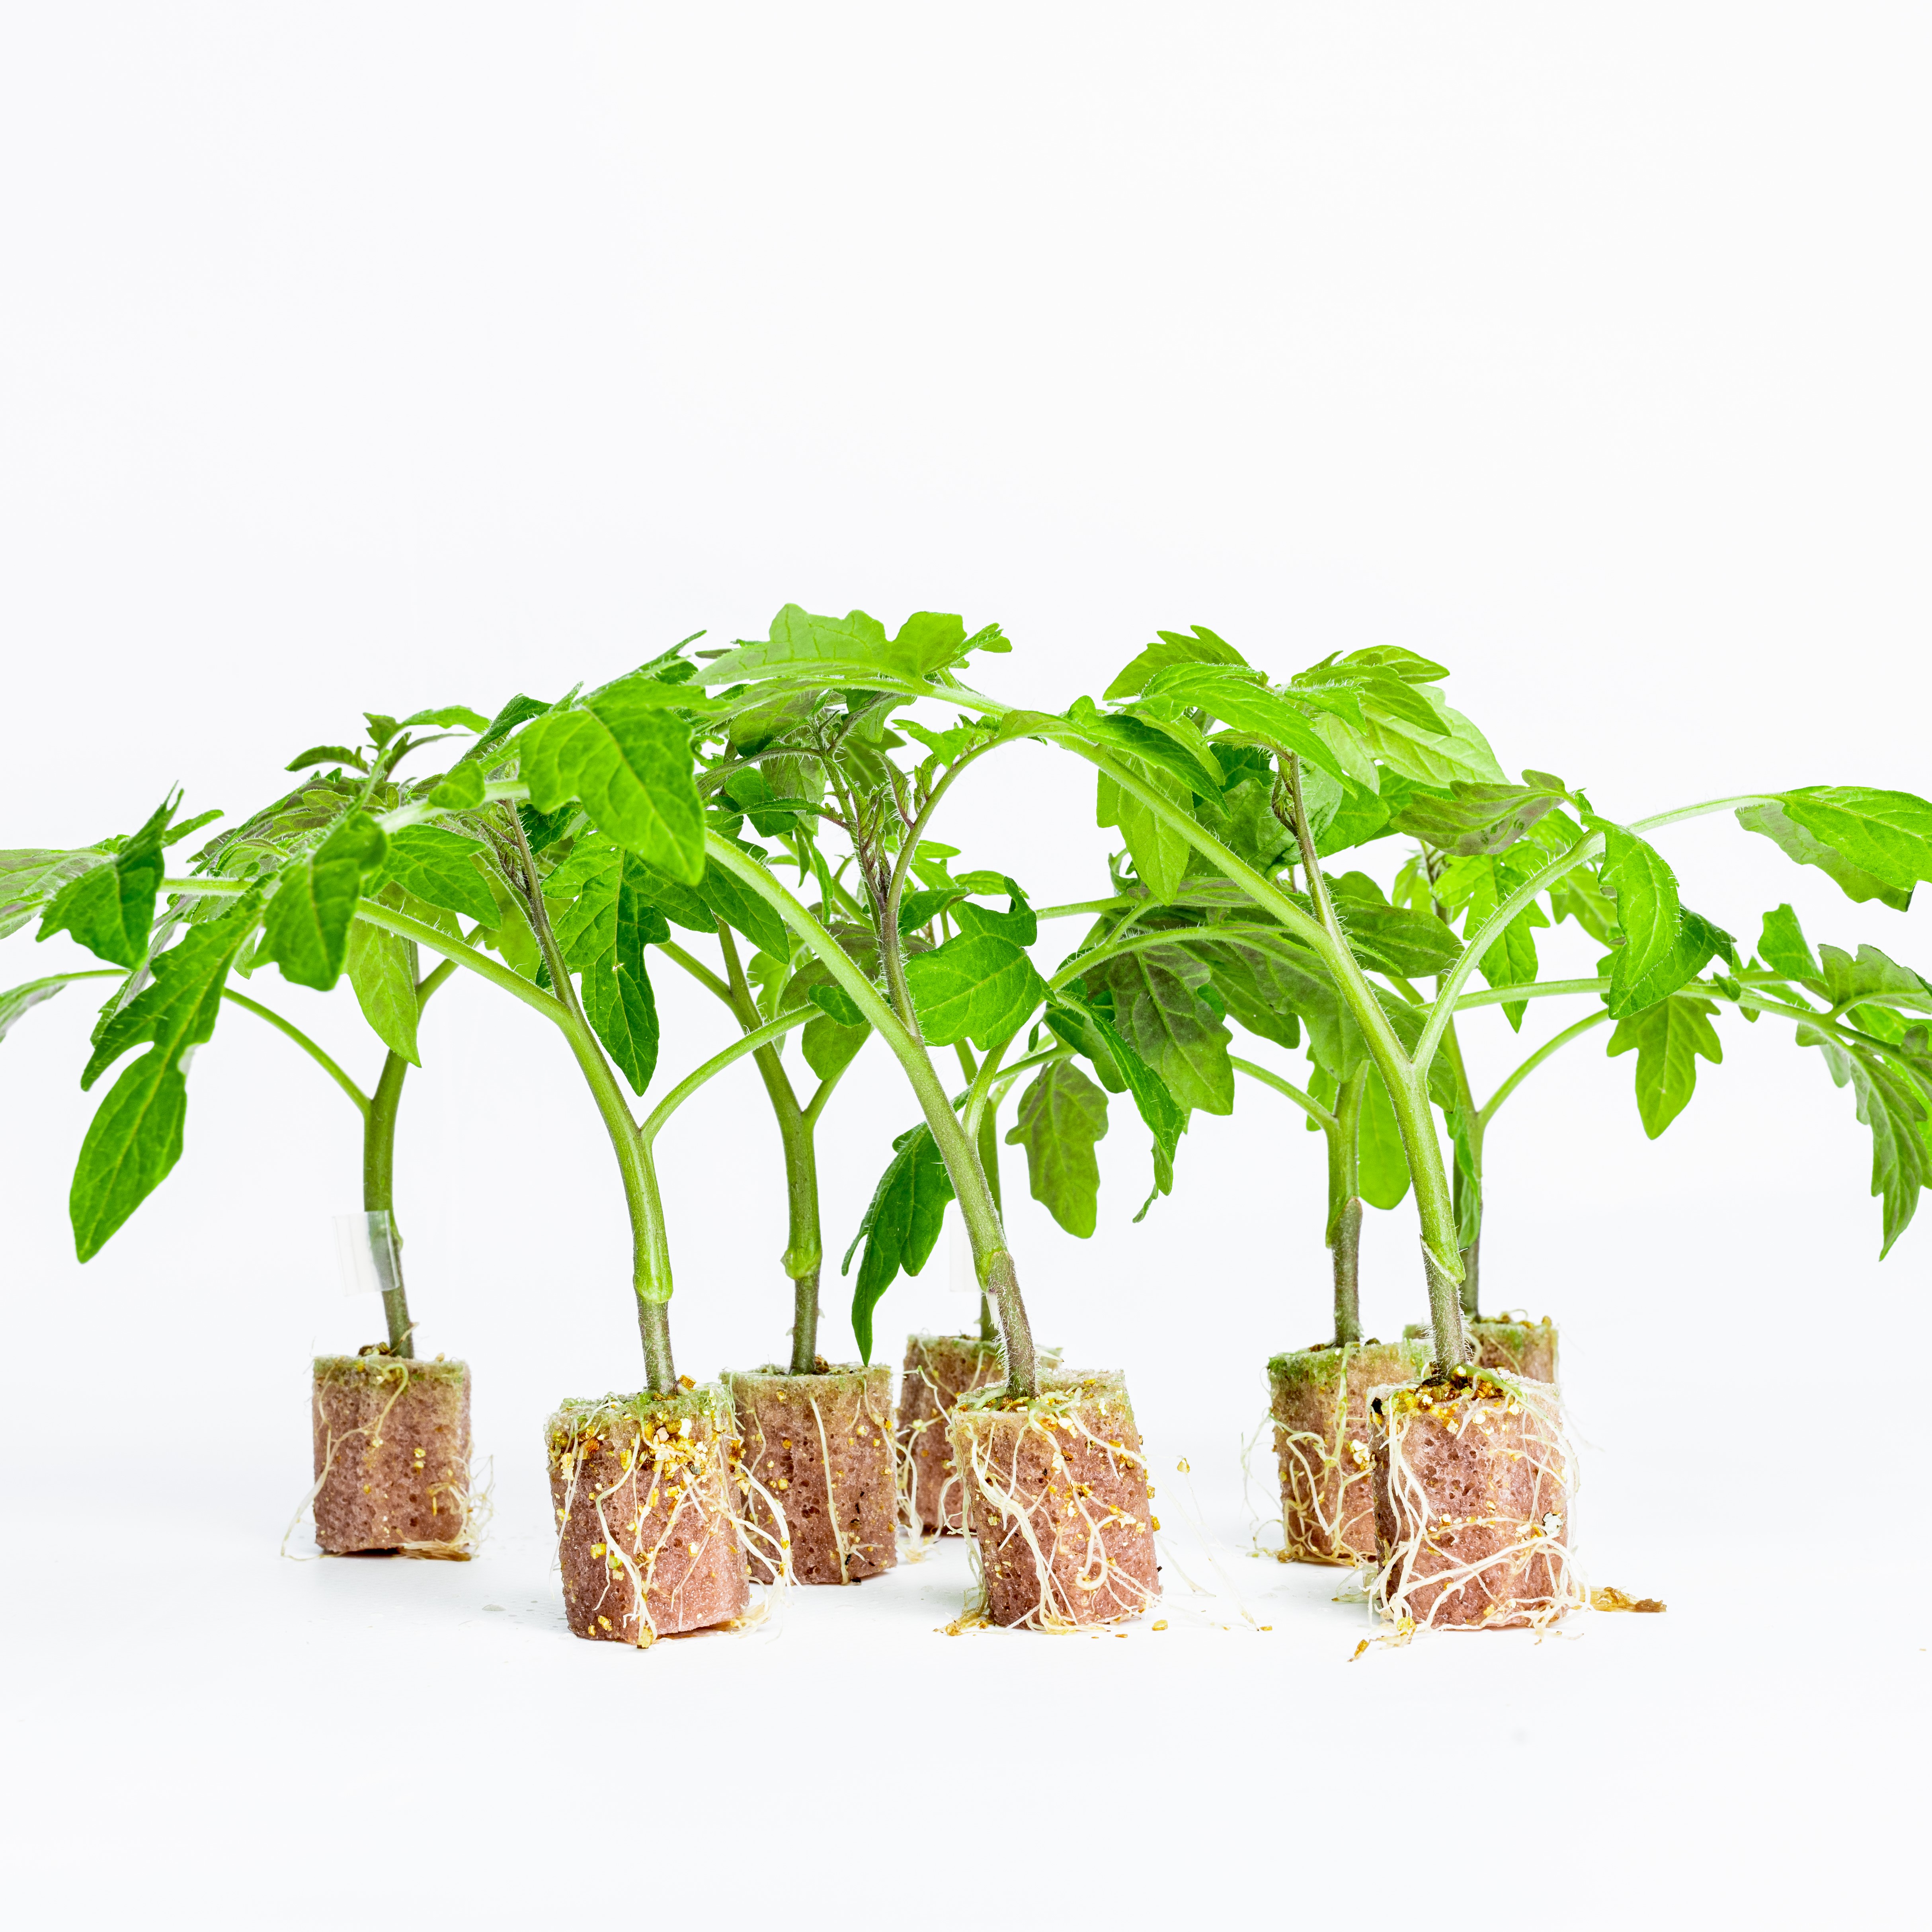 Groningen-based horticulture start-up receives 2 million for developing biodegradable foam substrate